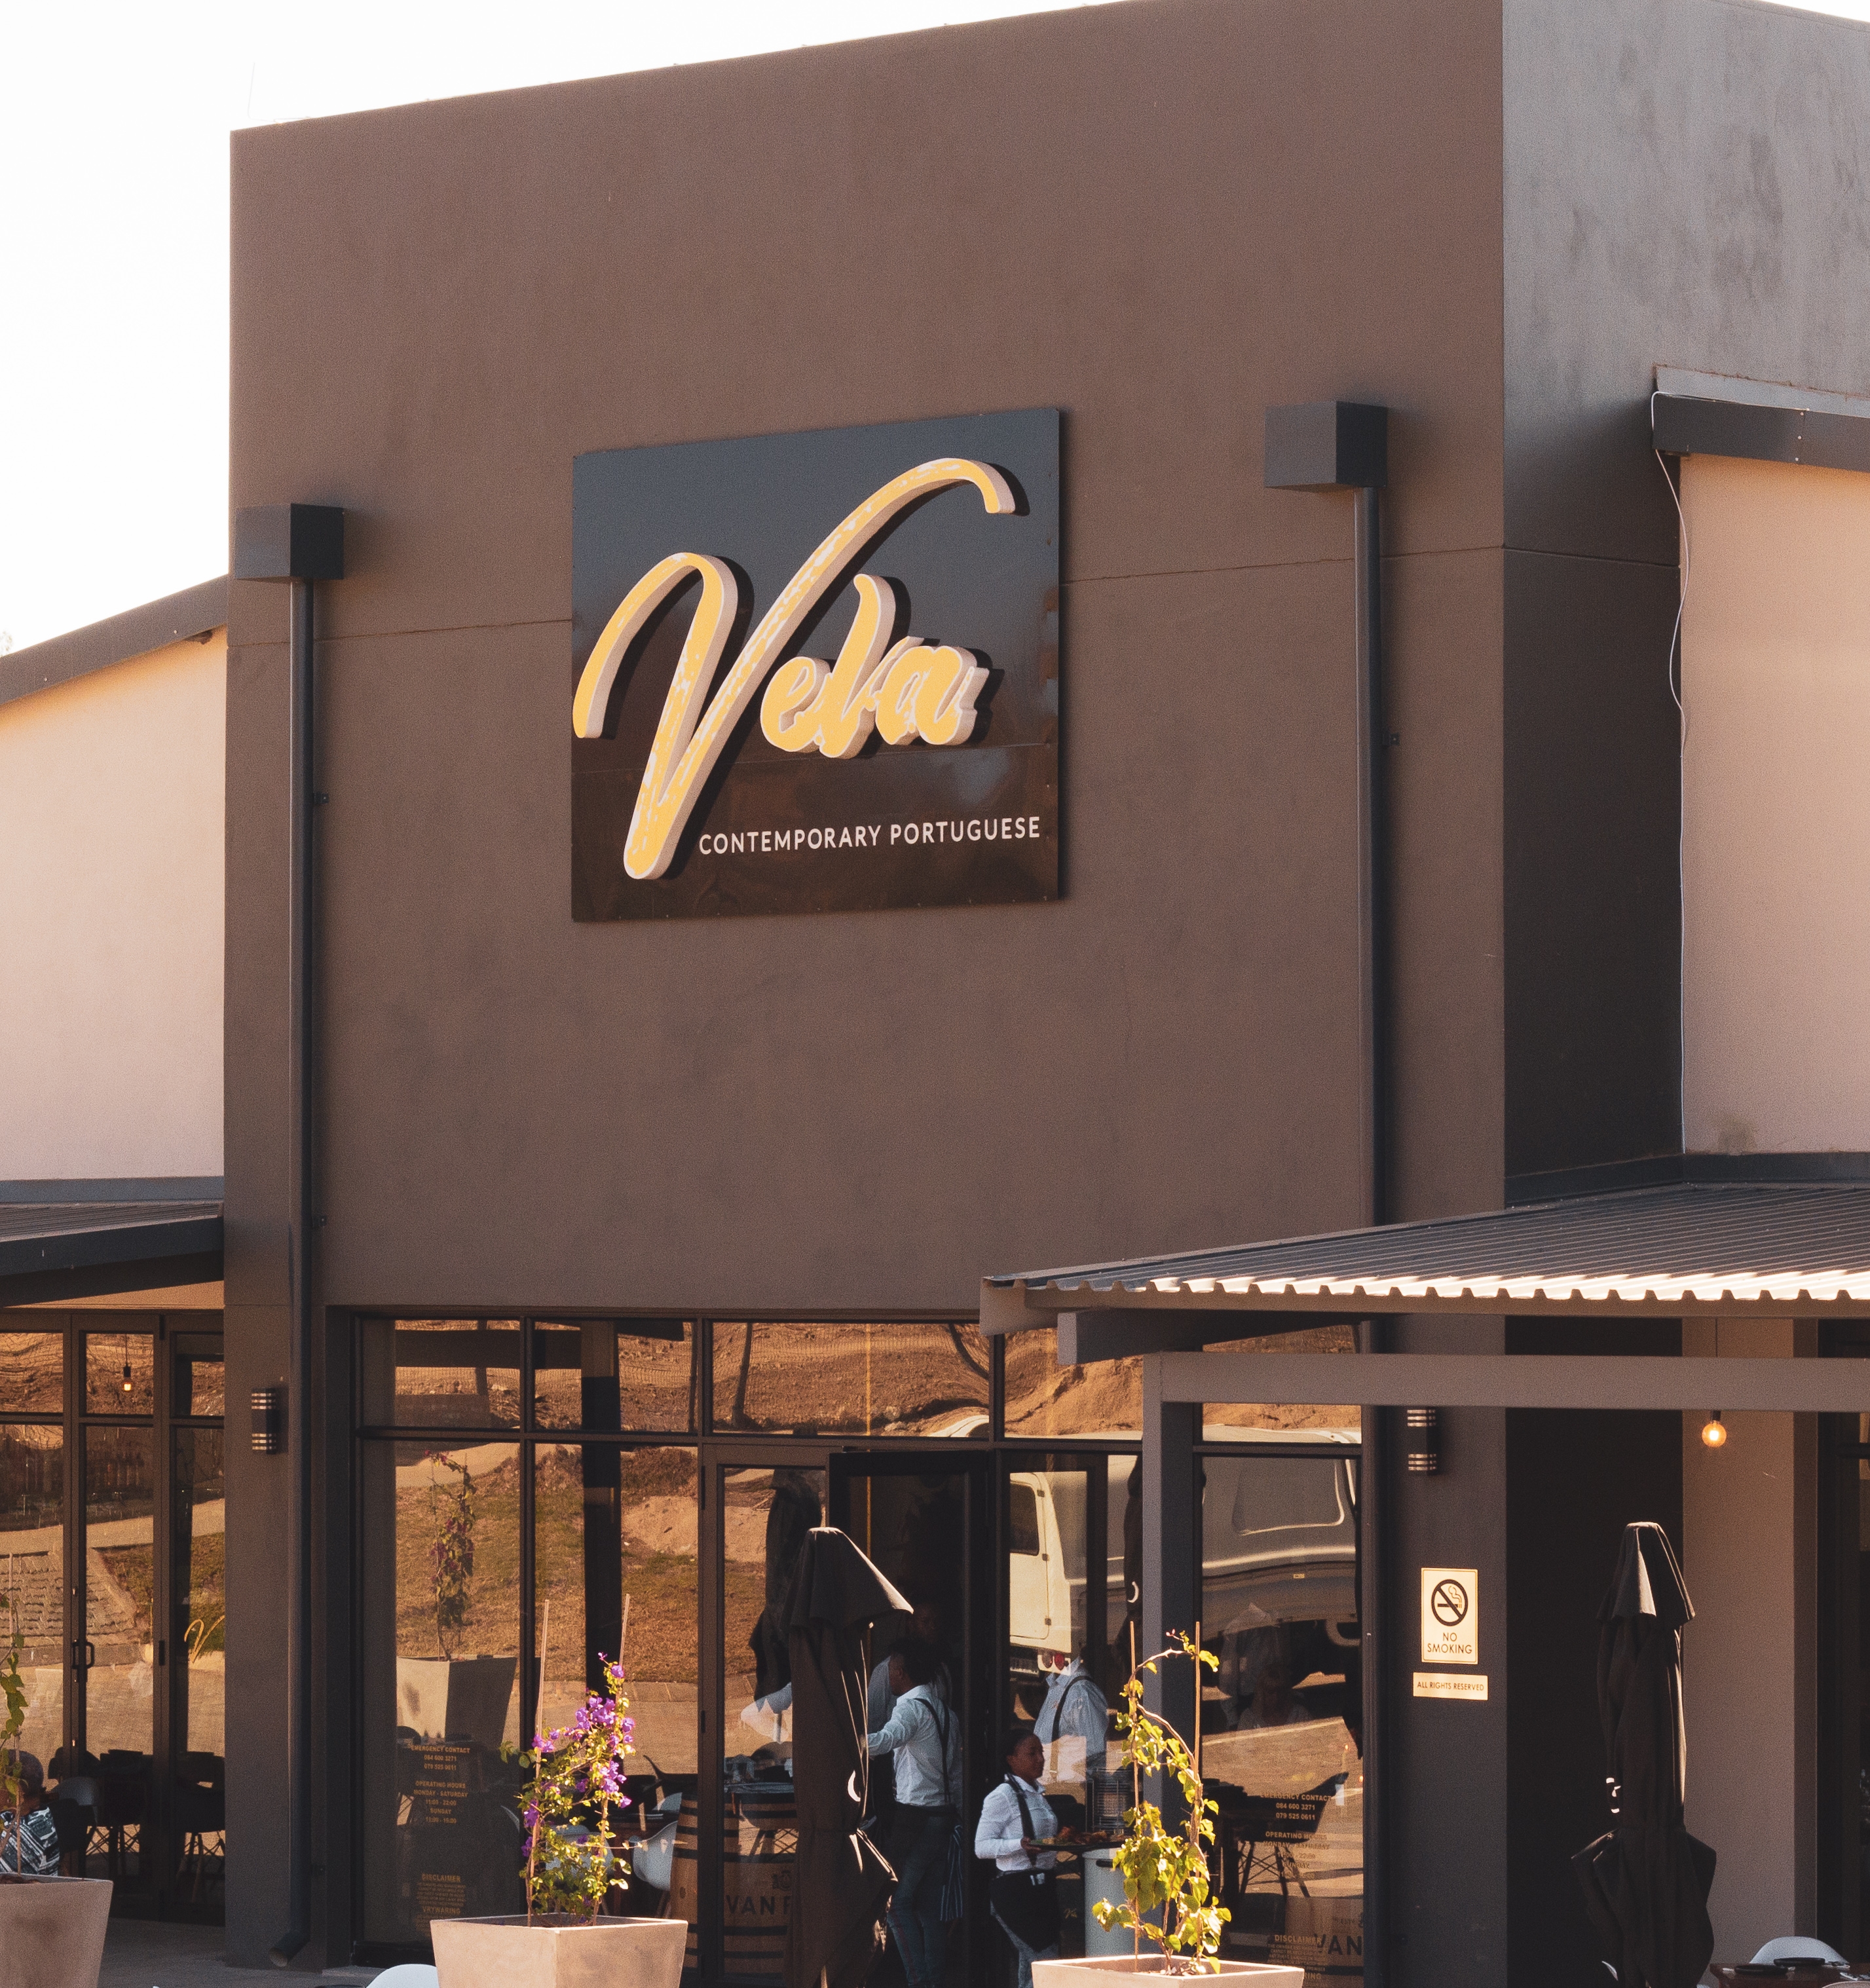 Vela Contemporary Portuguese - Restaurant in Hartbeespoort - EatOut